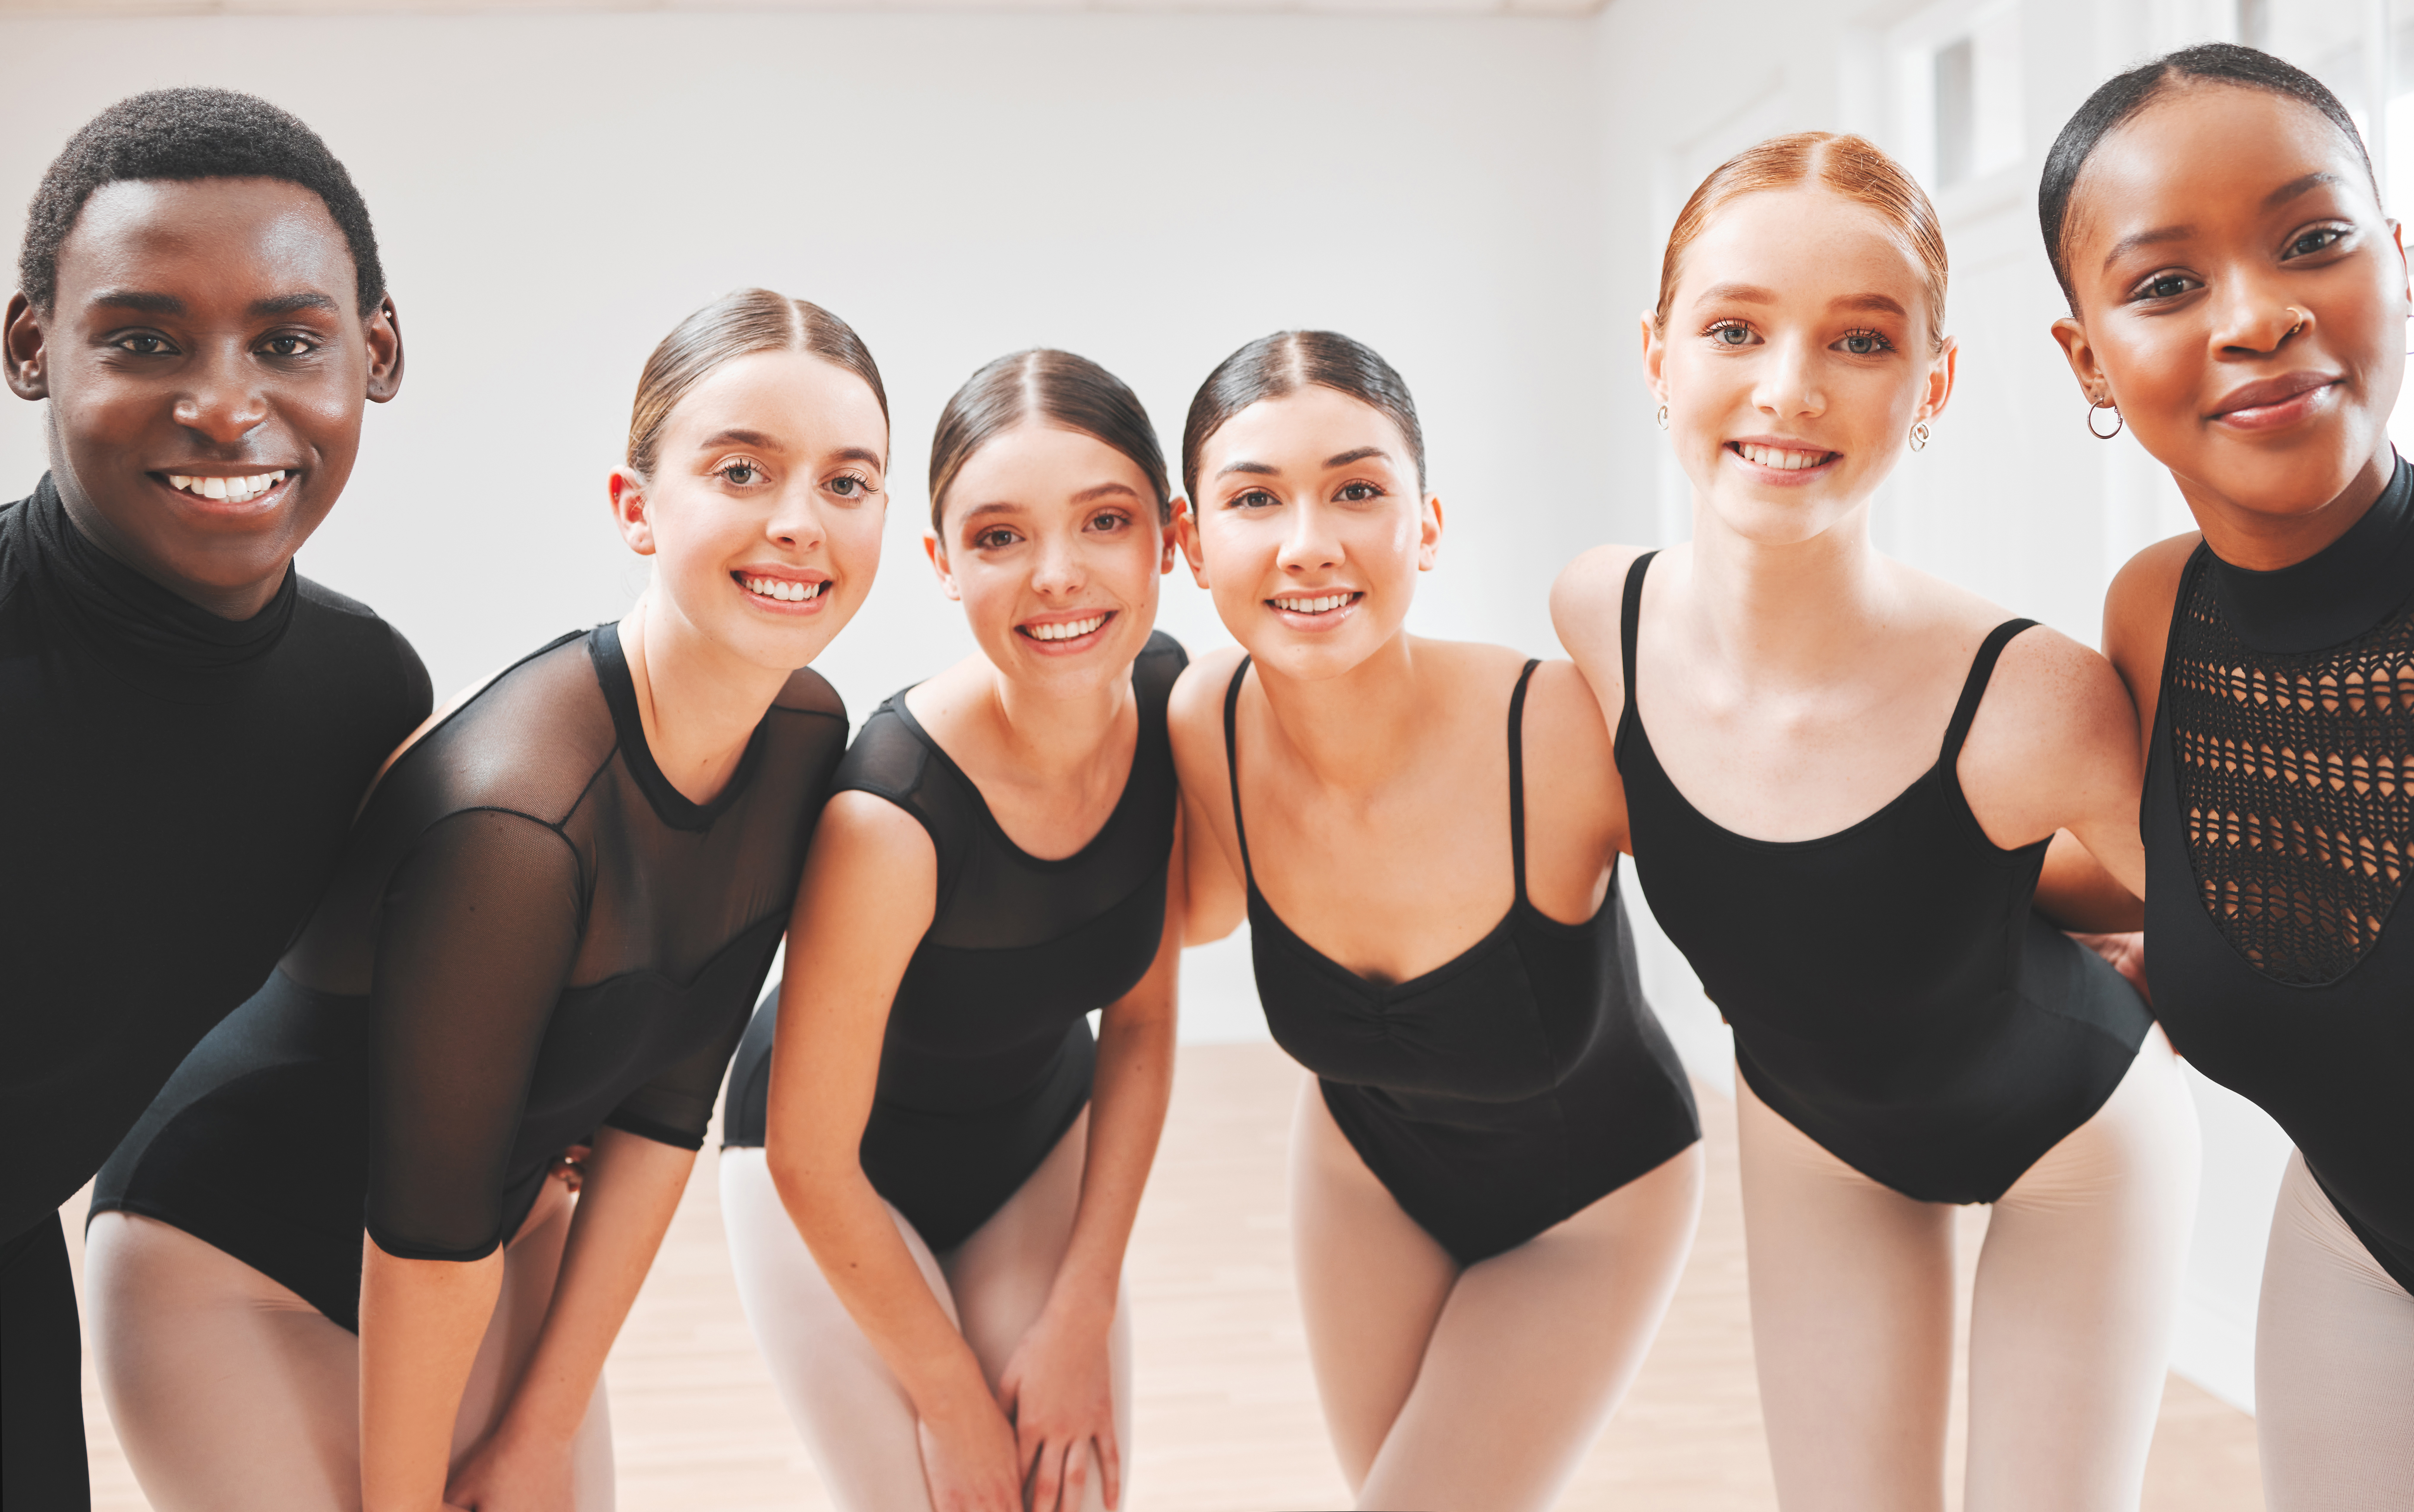 Shot of a group of ballet dancers standing together